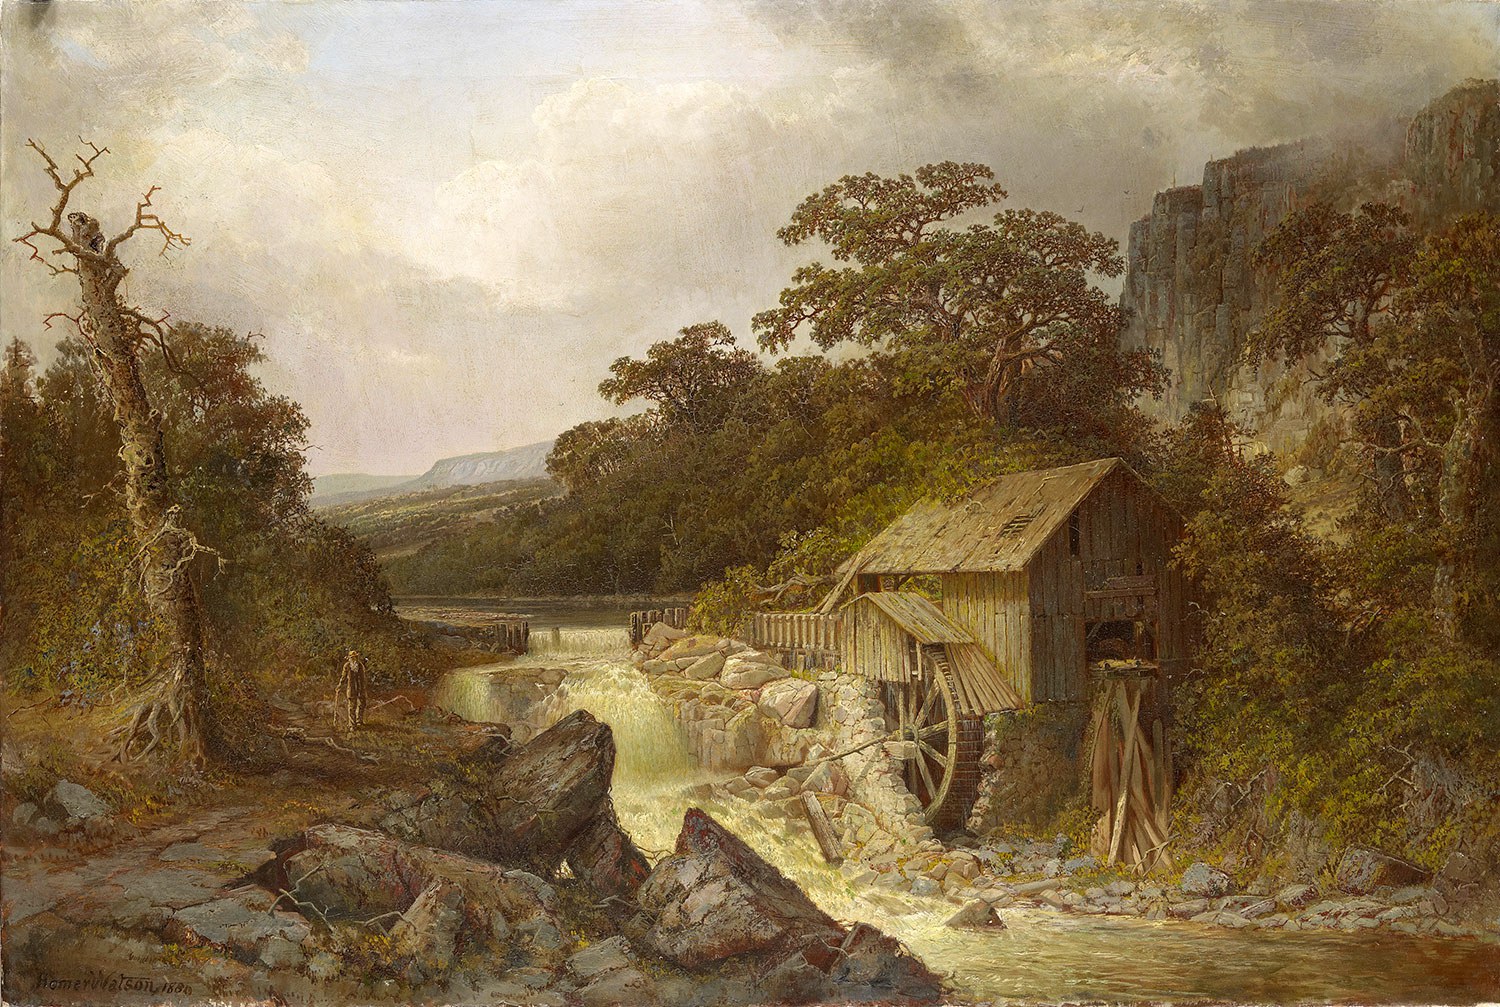 The Pioneer Mill, 1880, Homer Watson, huile sur toile, 86 x 127 cm, collection royale (Photo : Royal Collection Trust/© S. M. la reine Élisabeth II 2012)